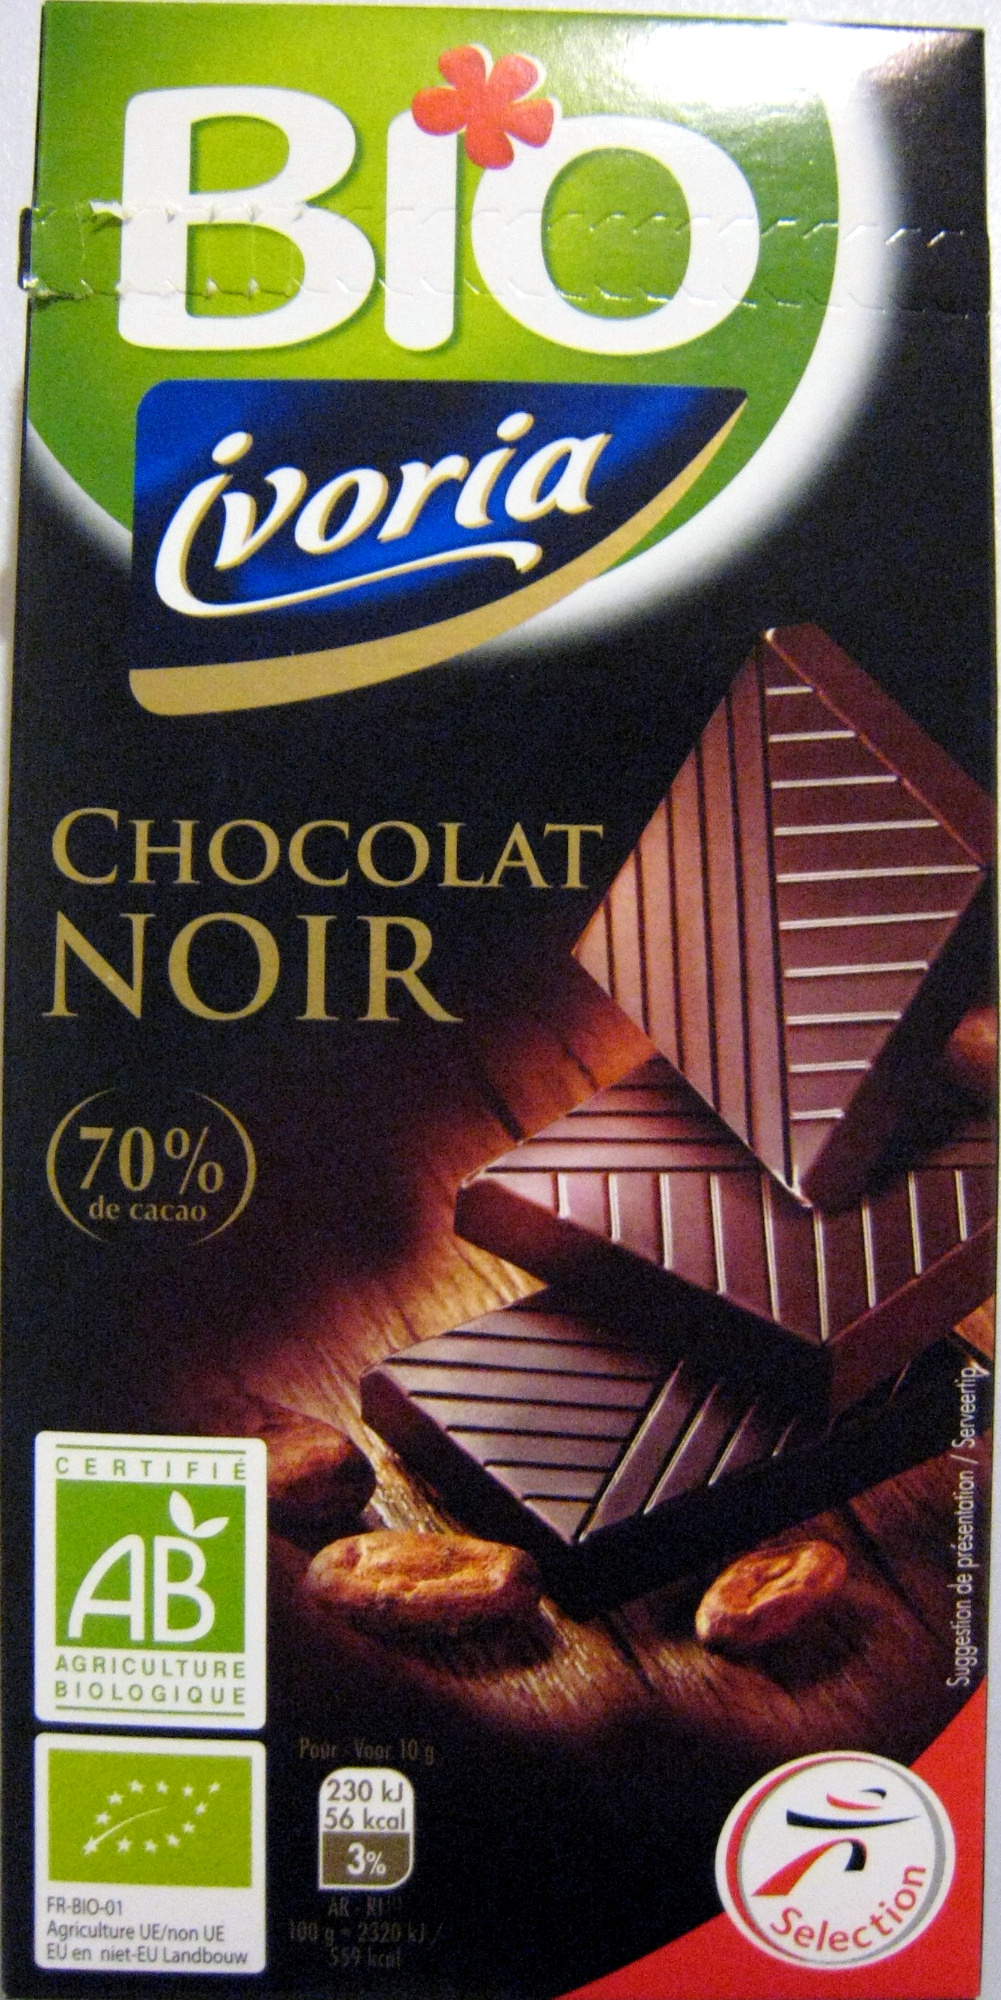 IVORIA - Tablette chocolat noir 70% bio